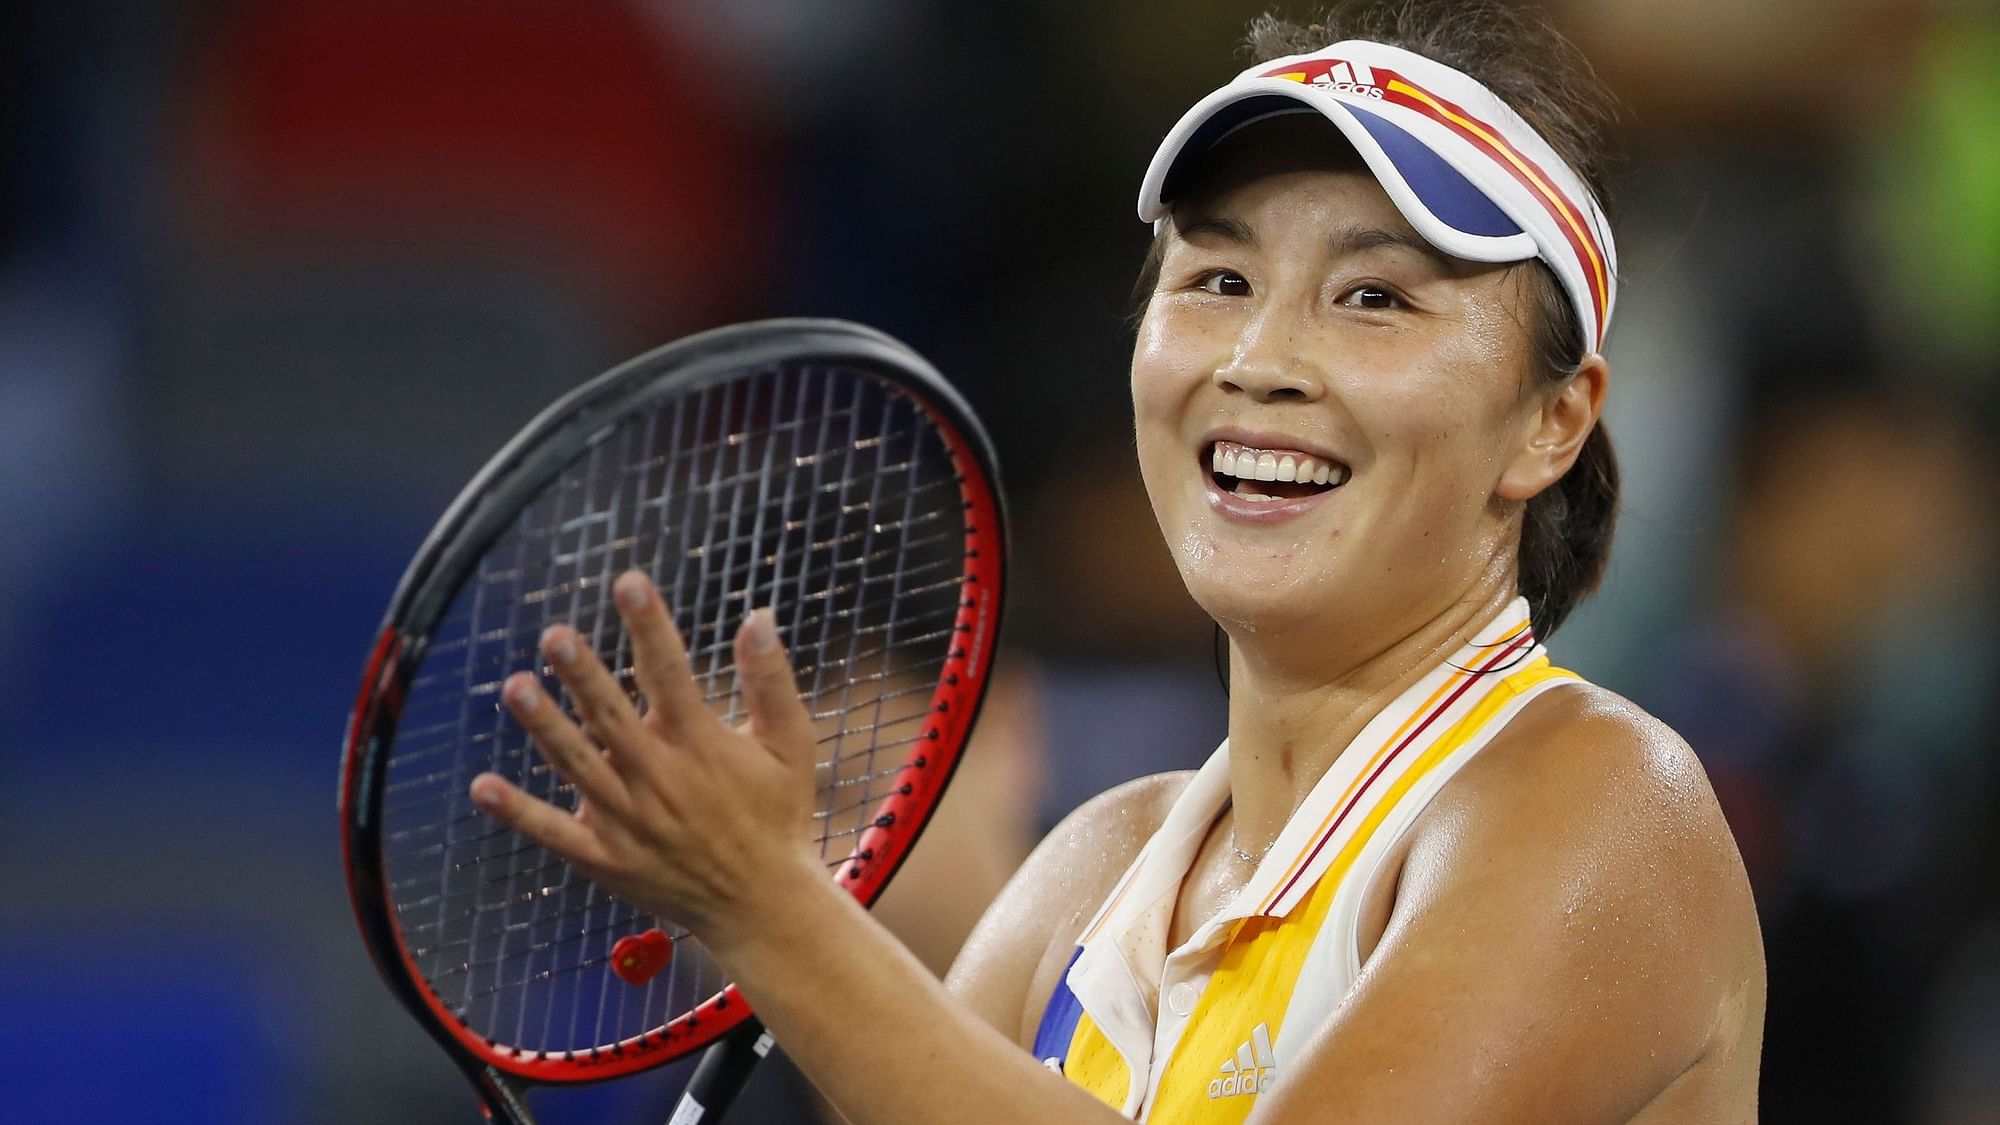 WTA Suspends All Tennis Tournaments Amidst Peng Shuai Controversy